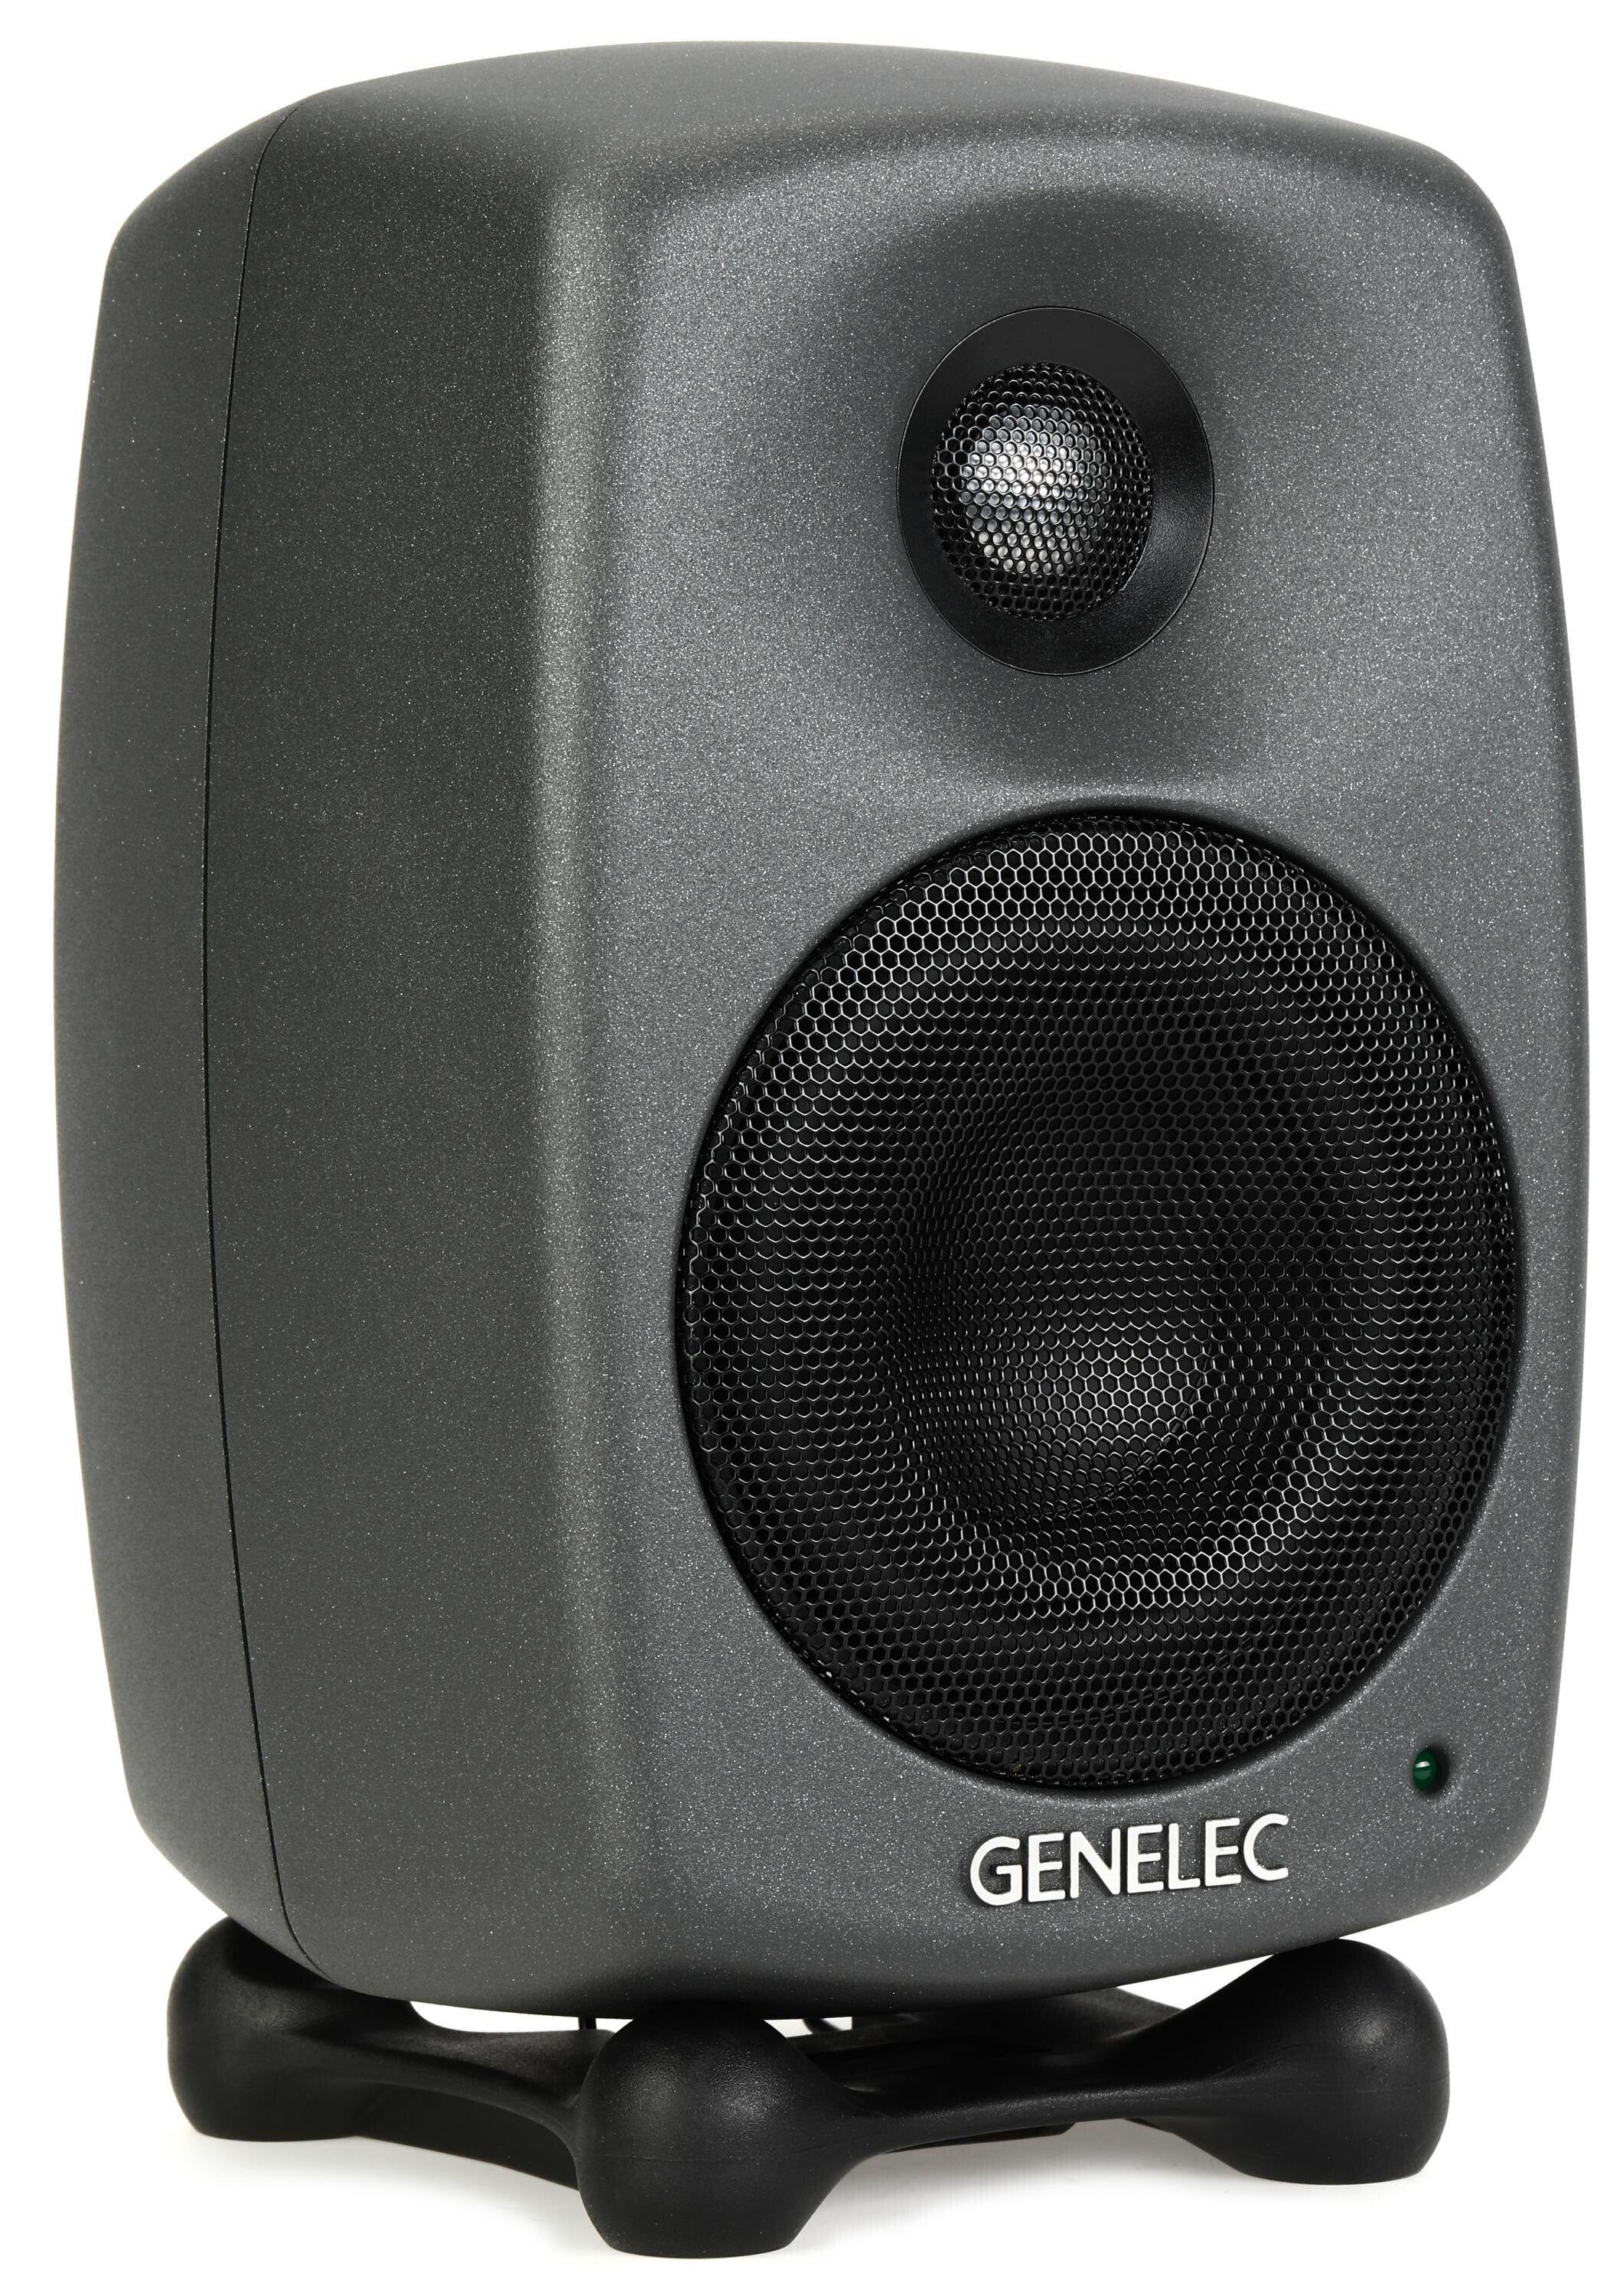 Bundled Item: Genelec 8020D 4 inch Powered Studio Monitor